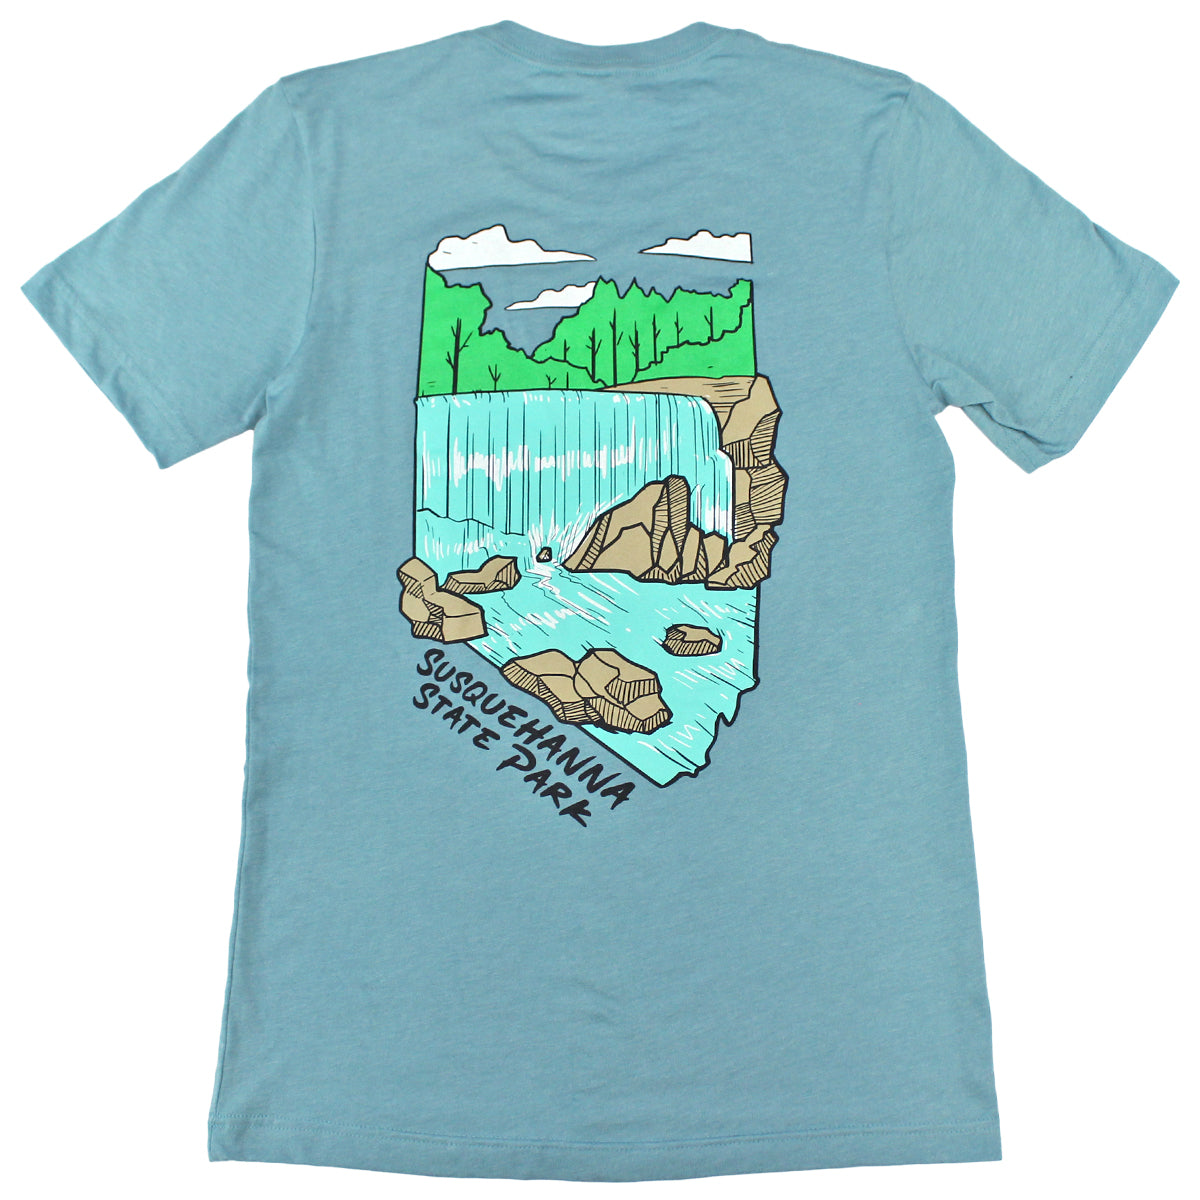 Susquehanna State Park / Shirt - Route One Apparel